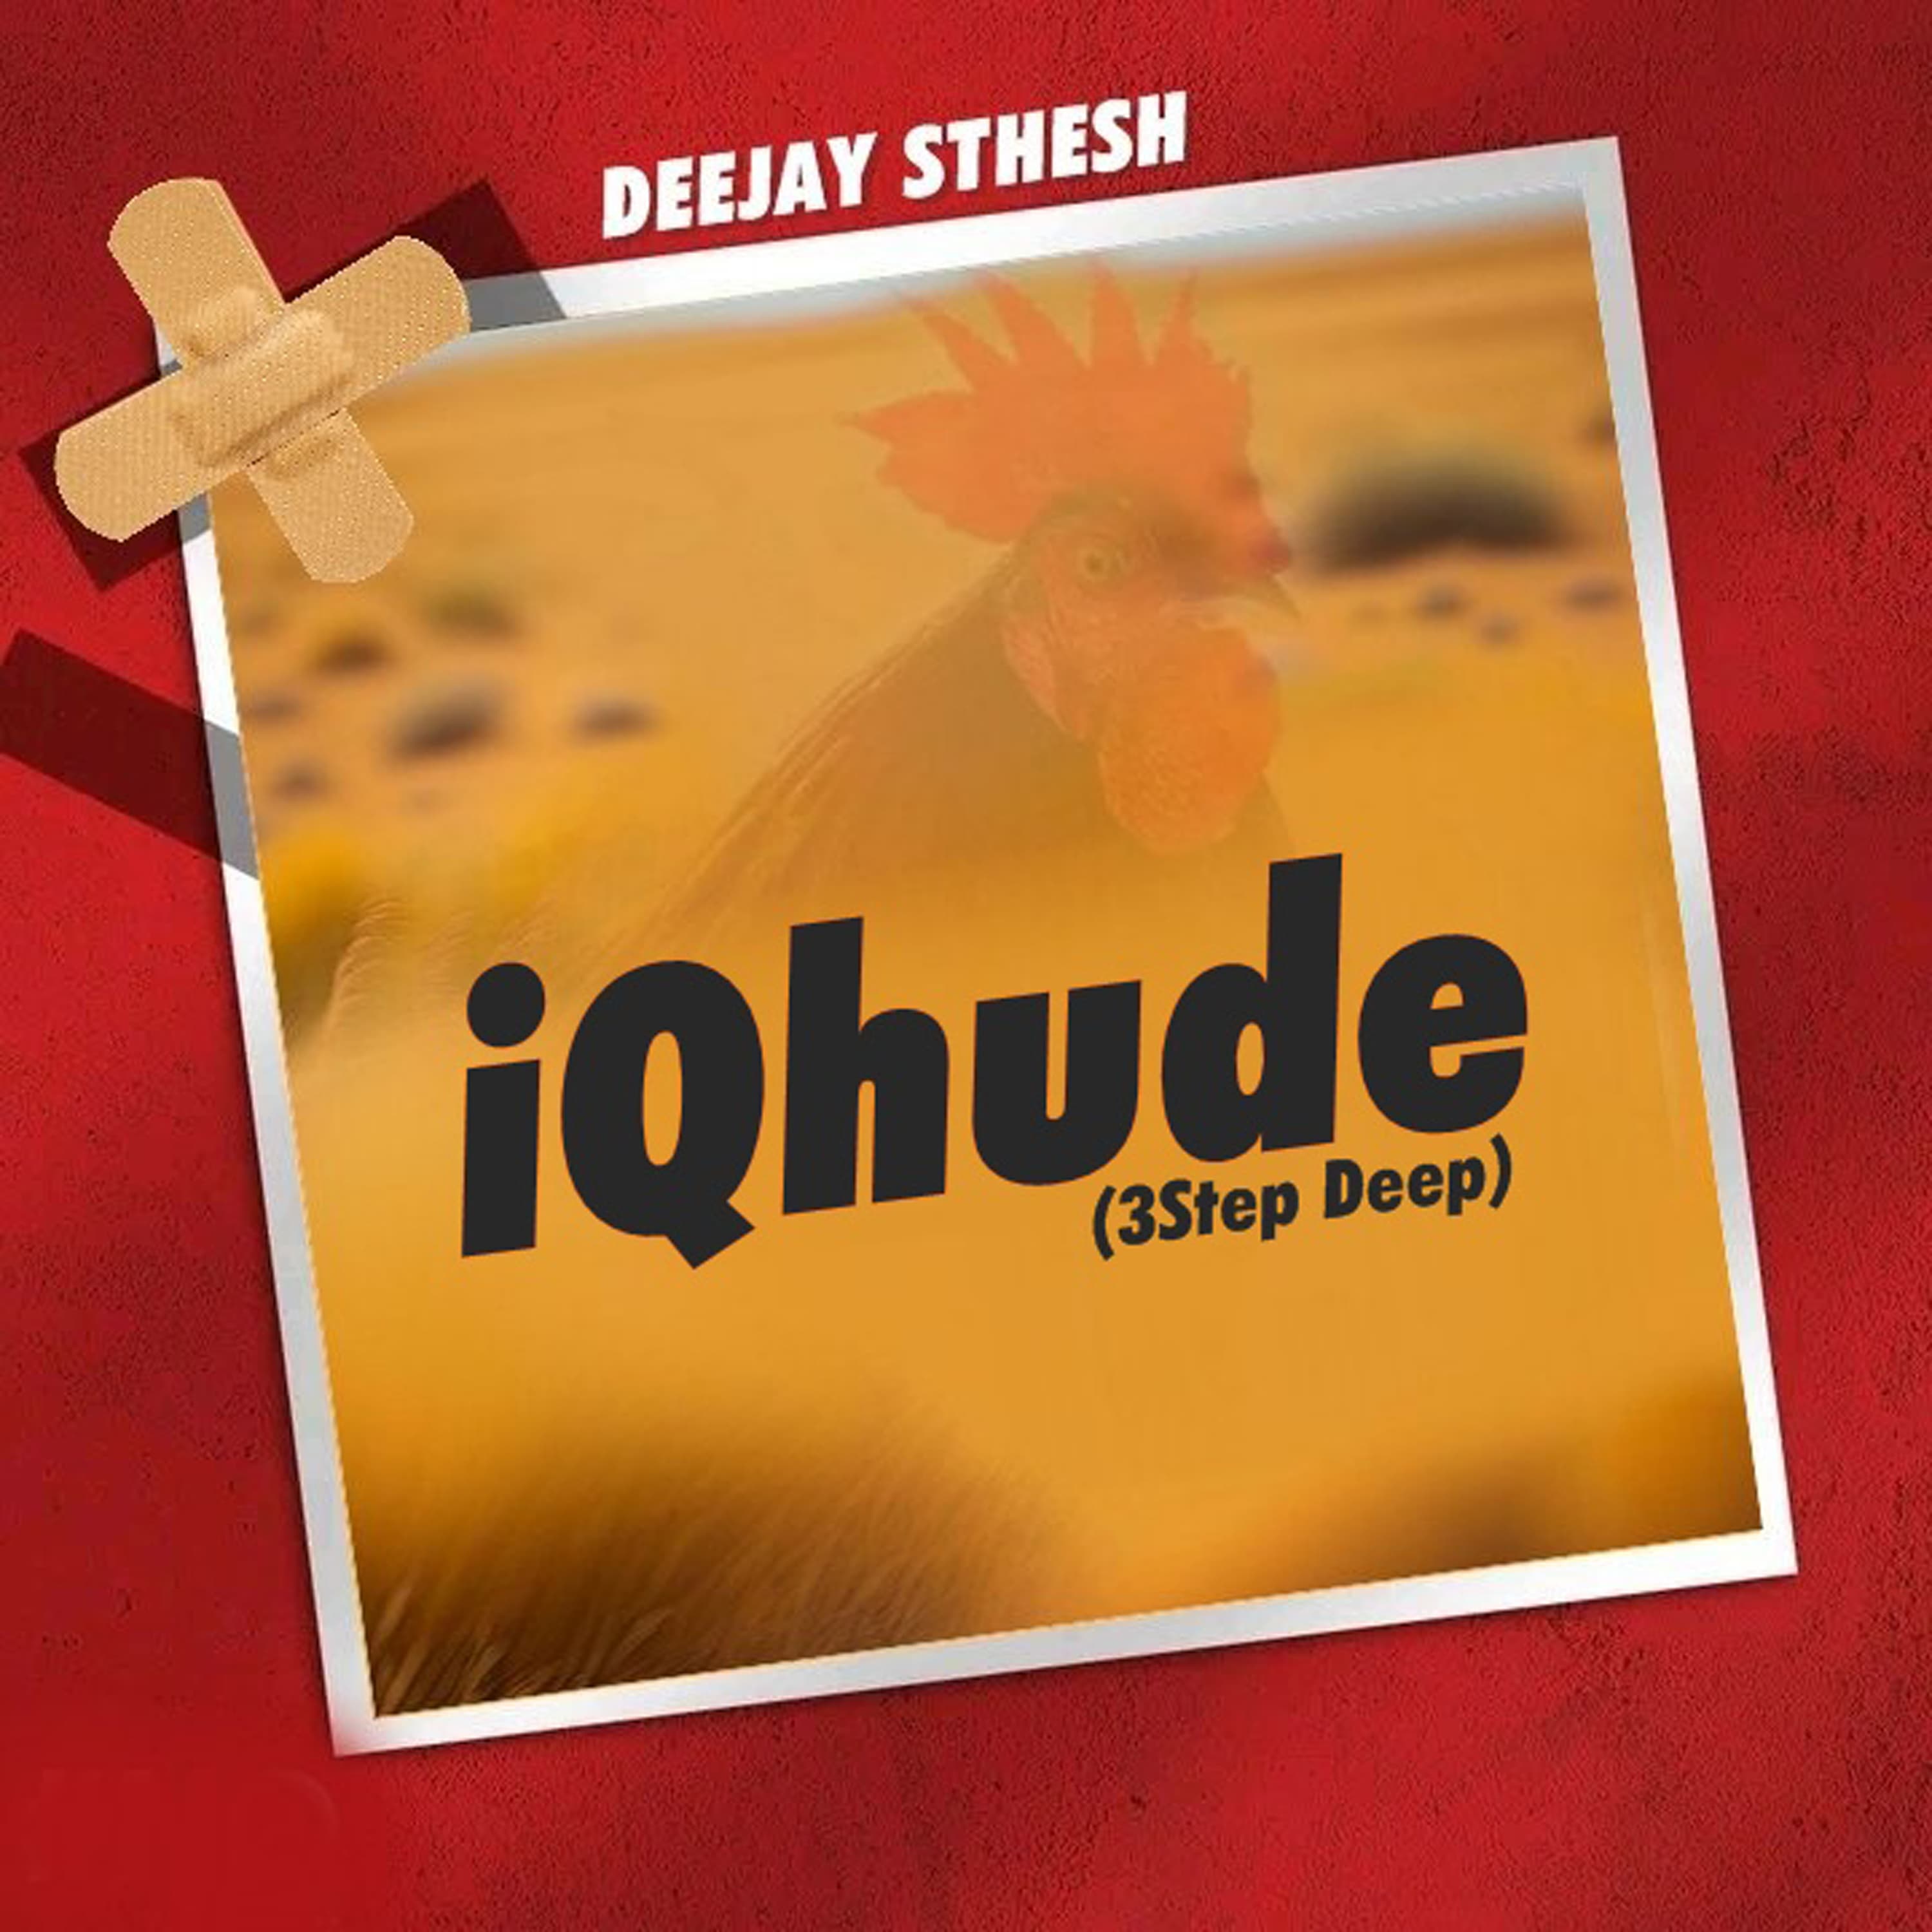 Iqhude (3 Step Deep) - Deejay Sthesh